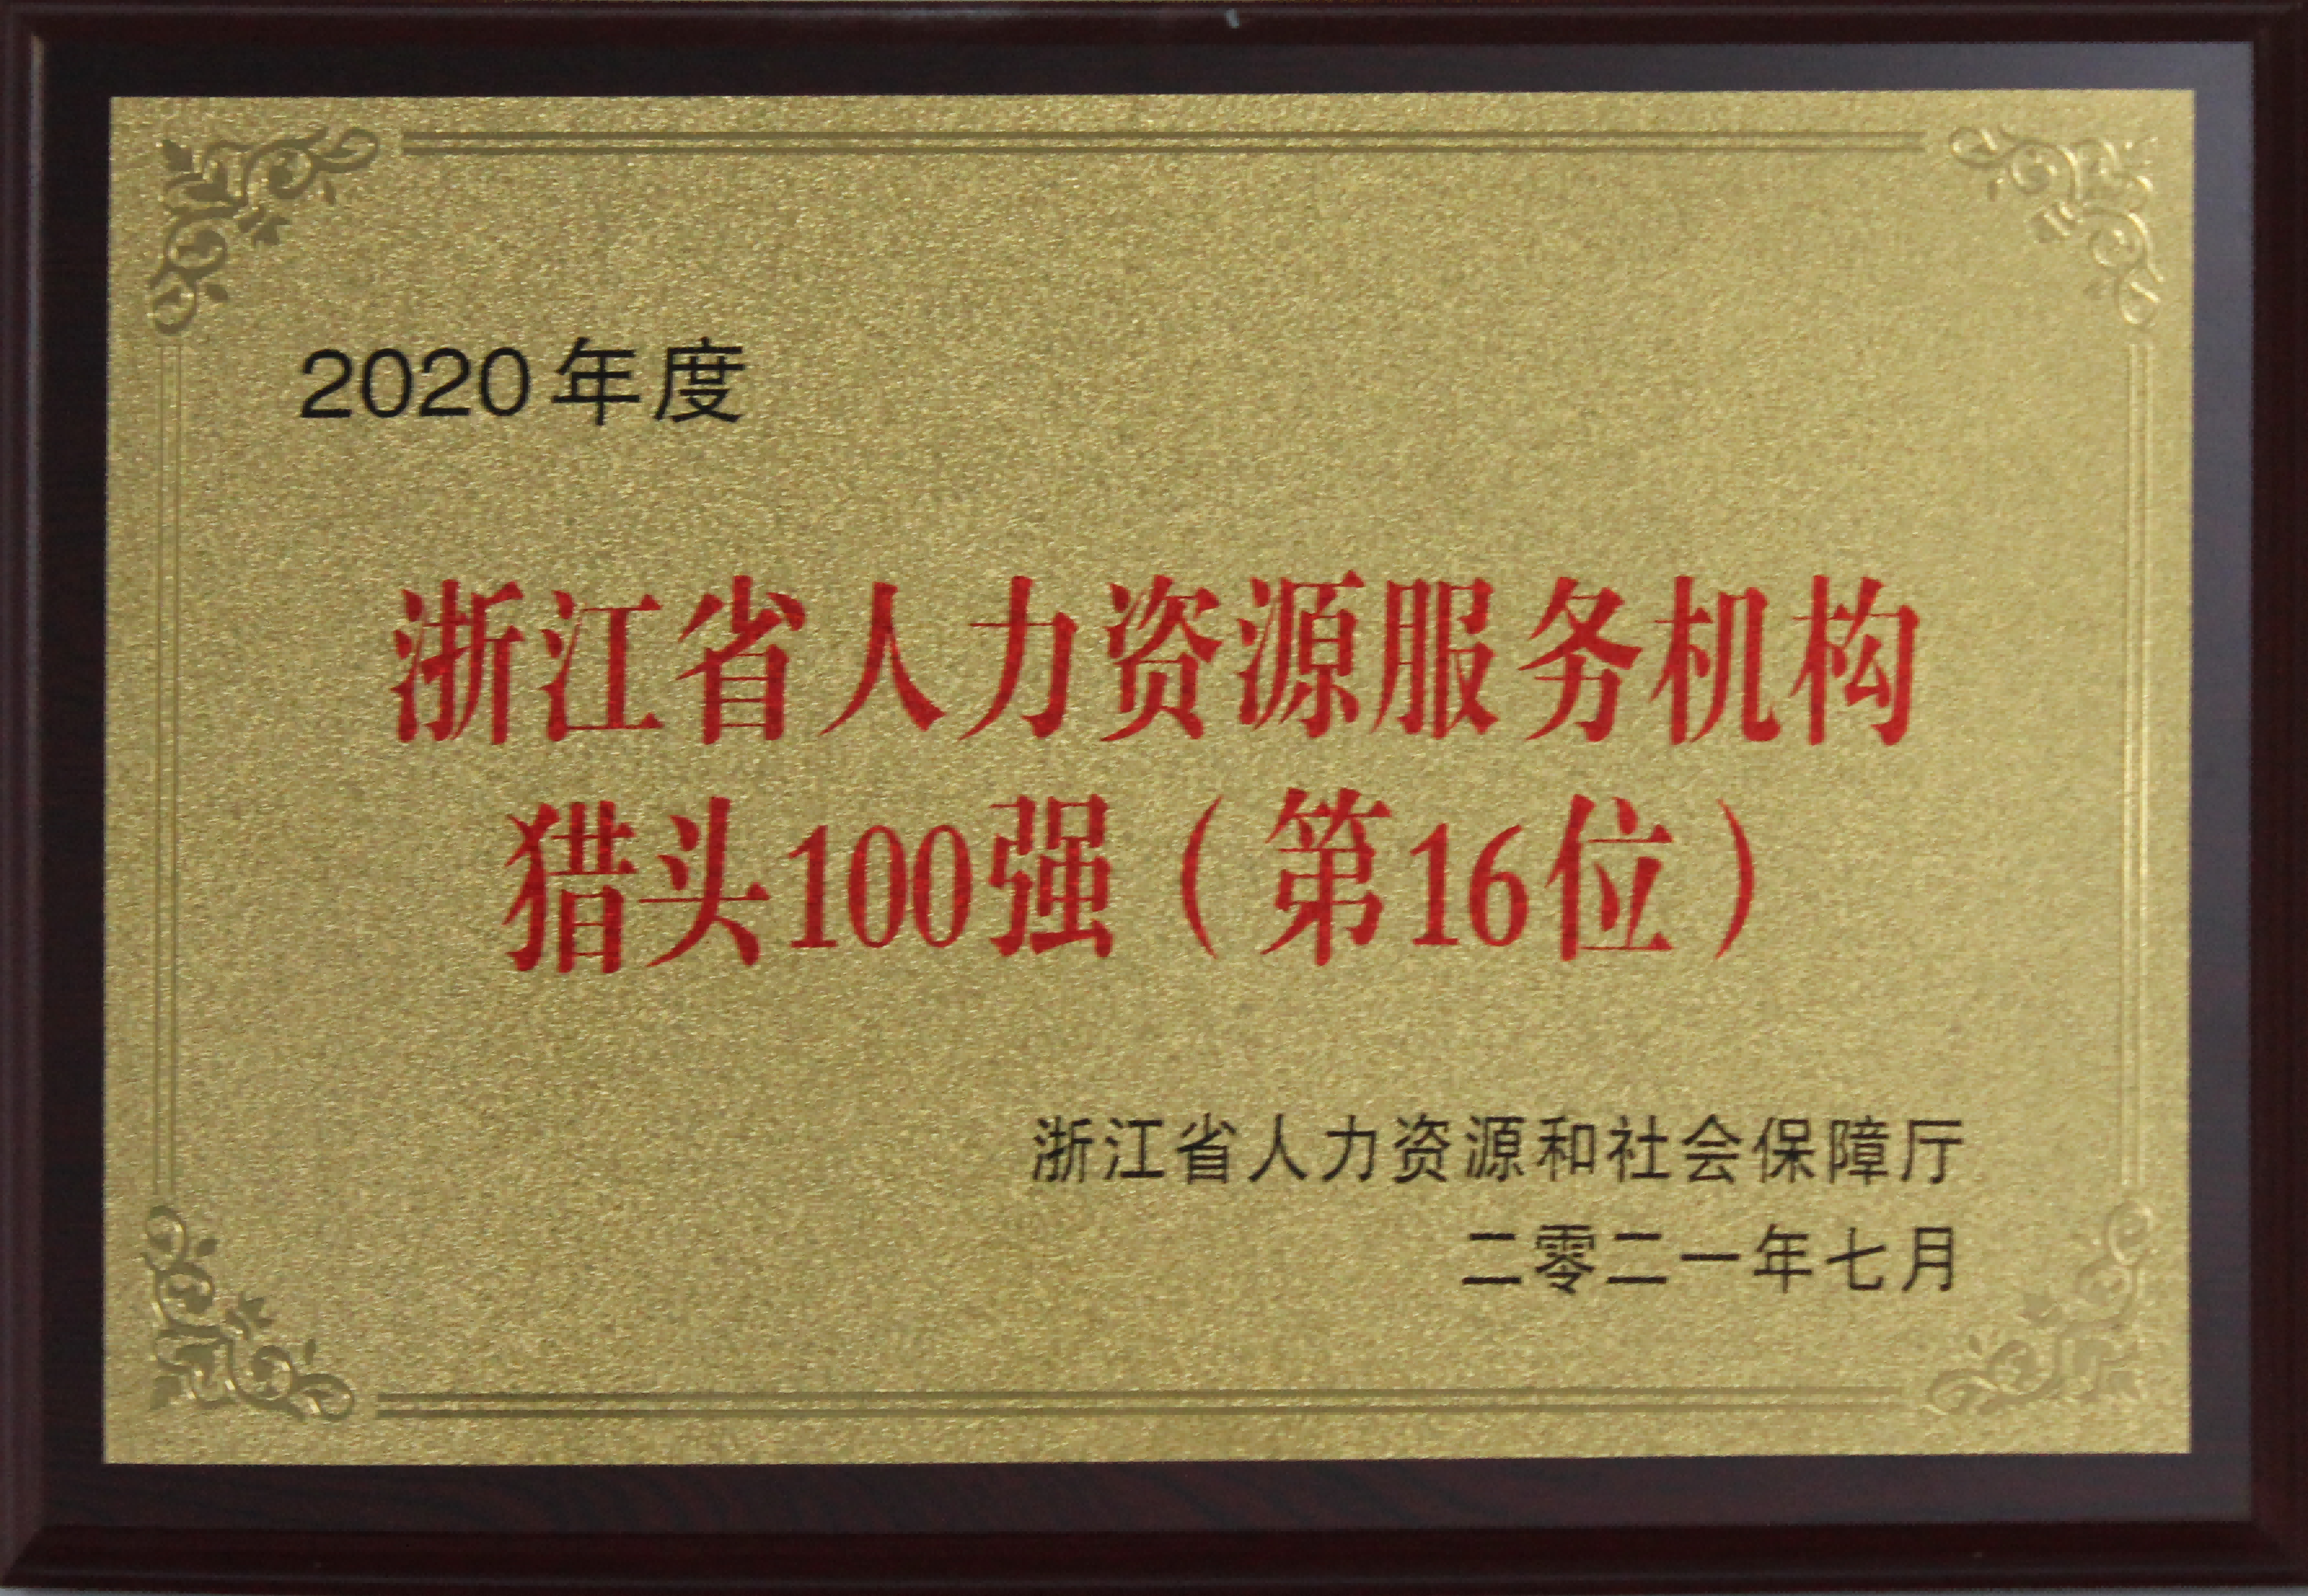 2020 Zhejiang Province Top 100 Headhunting Agencies(16th)